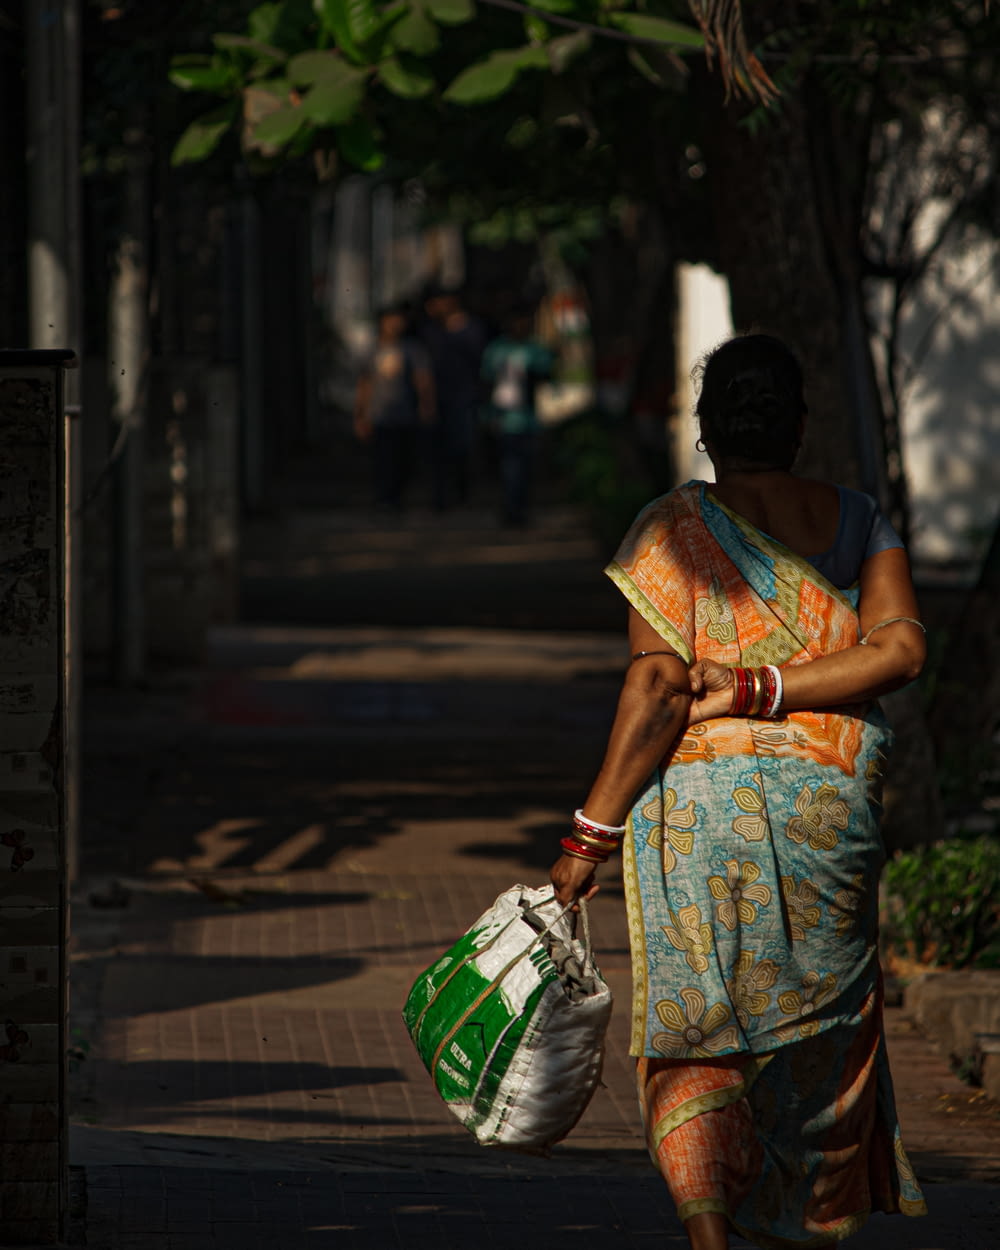 a woman walking down a street carrying a bag